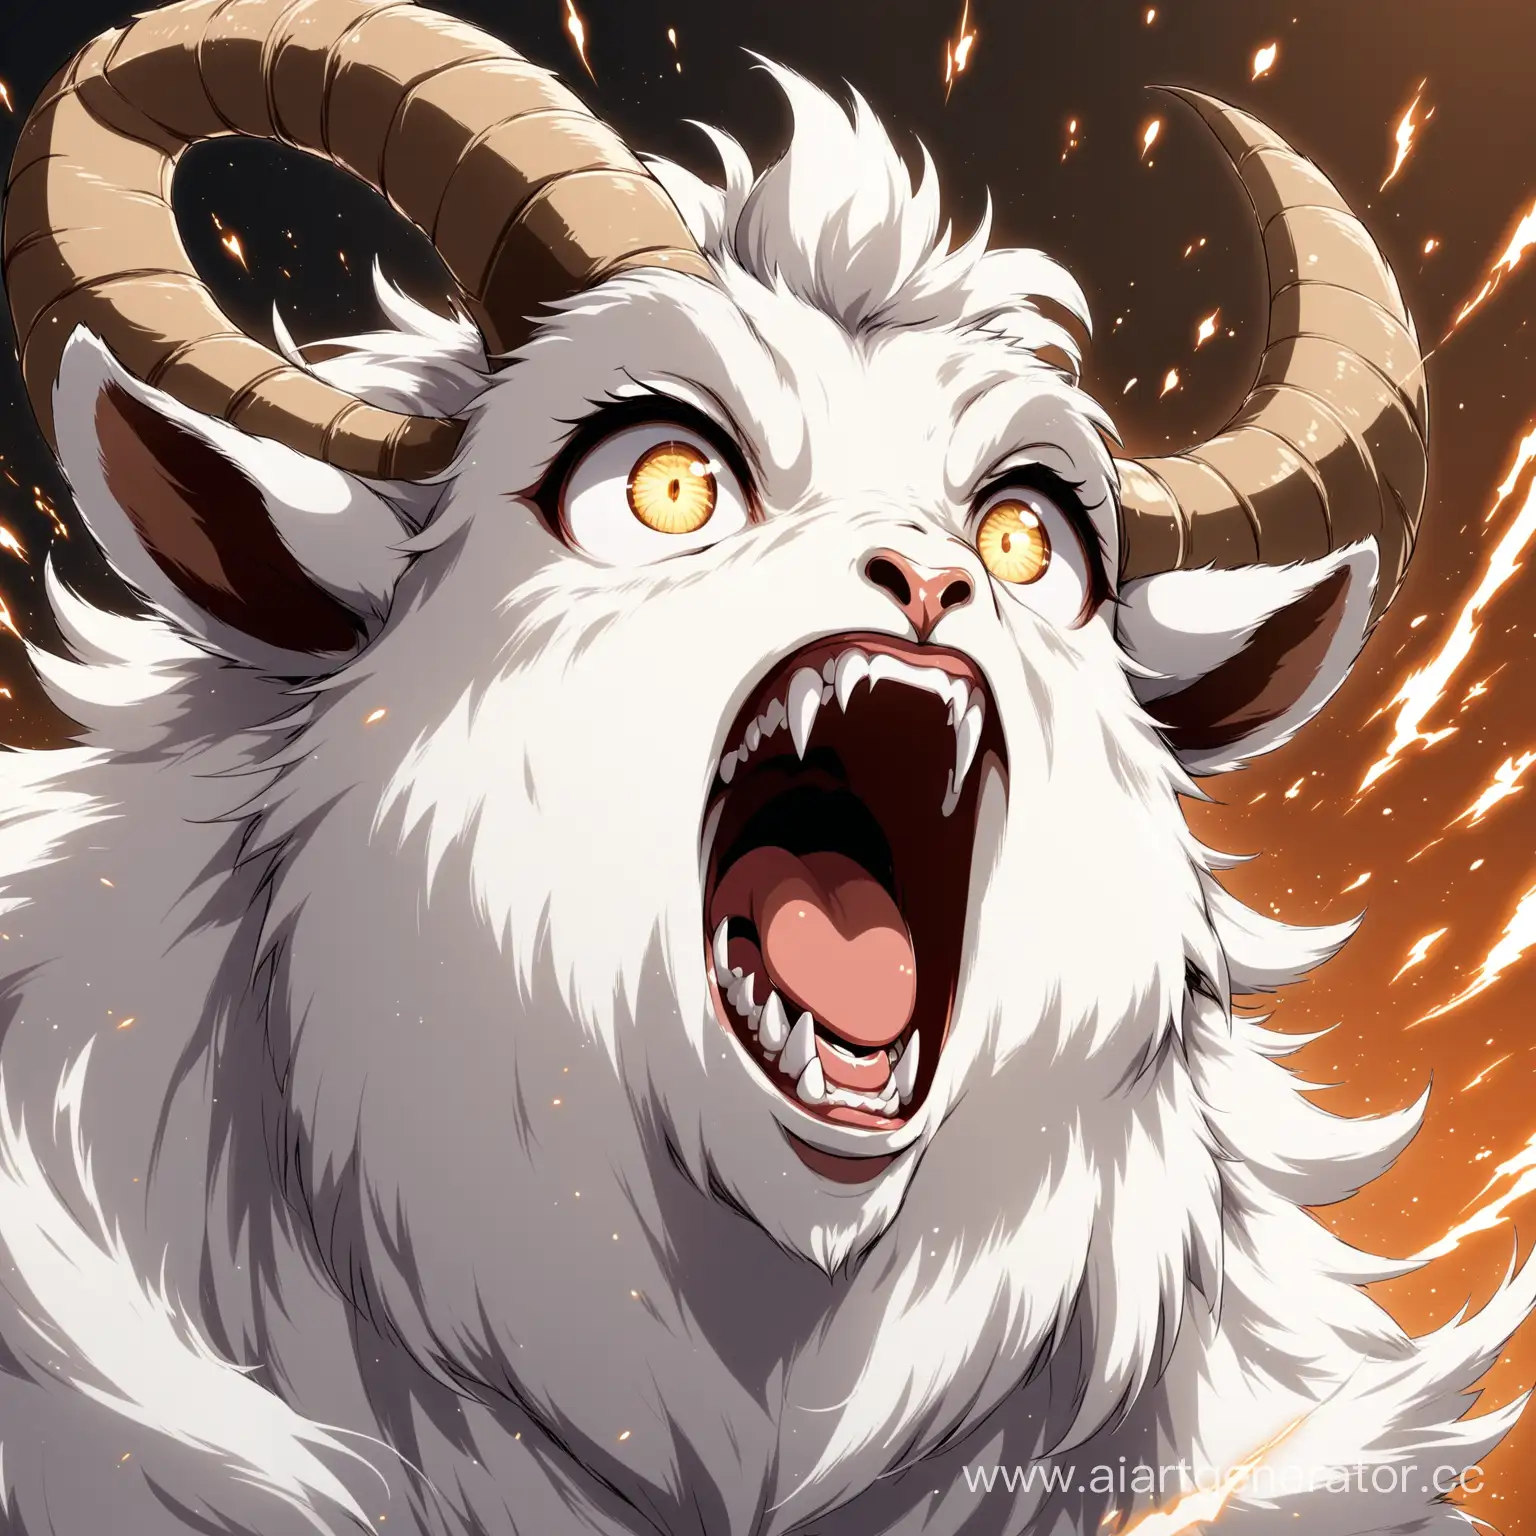 White-Anime-Goat-Head-Screaming-Loudly